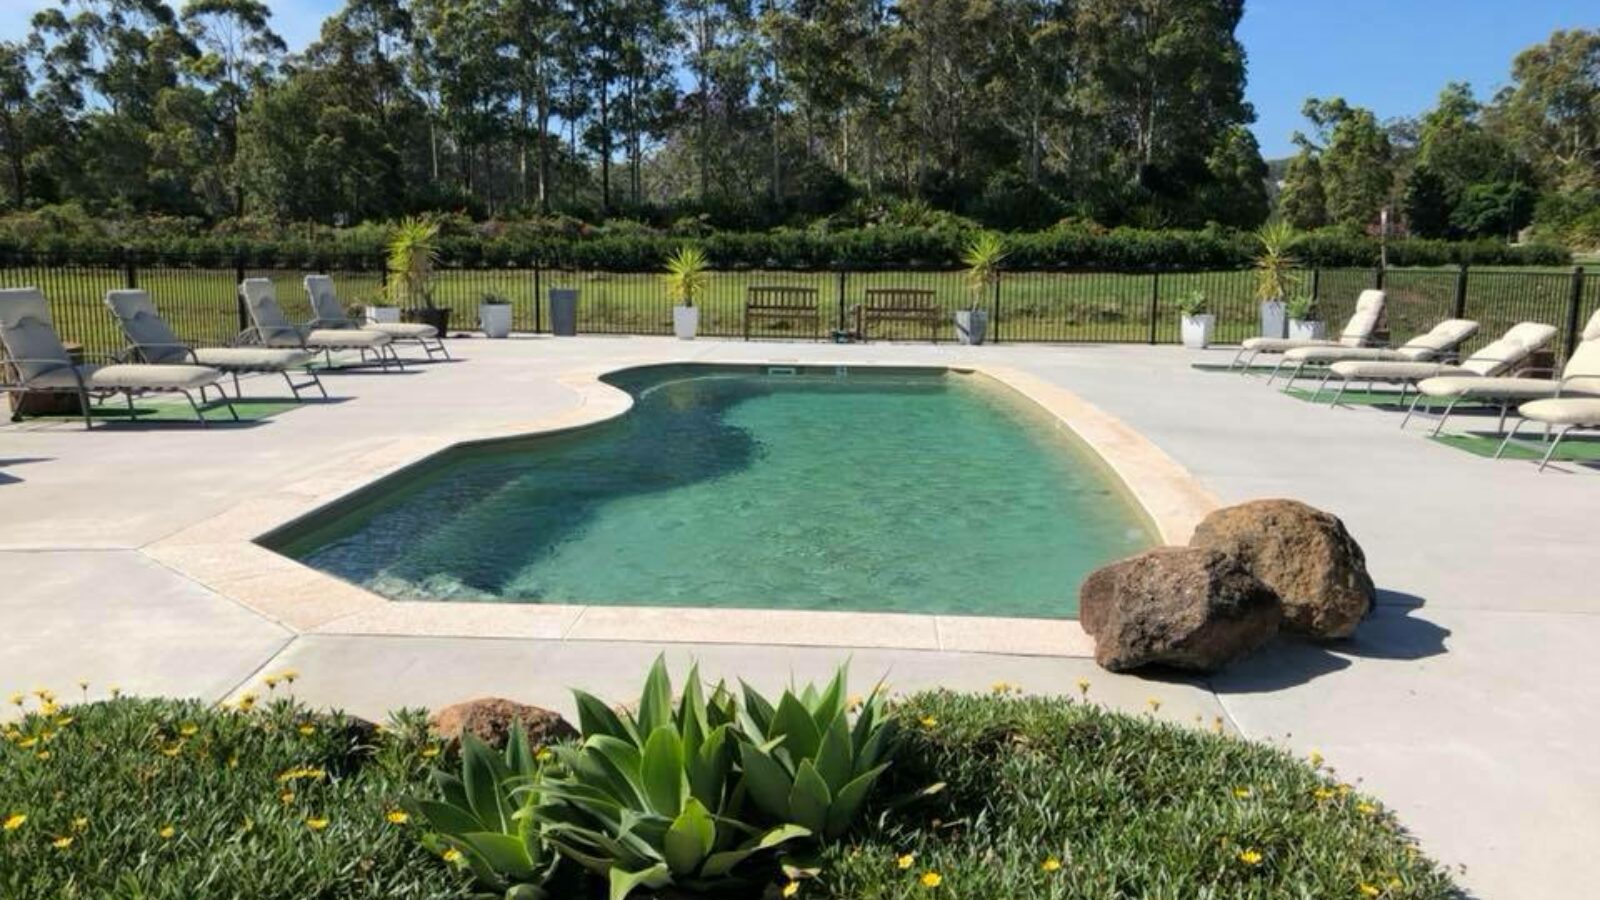 Hallidays Point Caravan Park resort pool